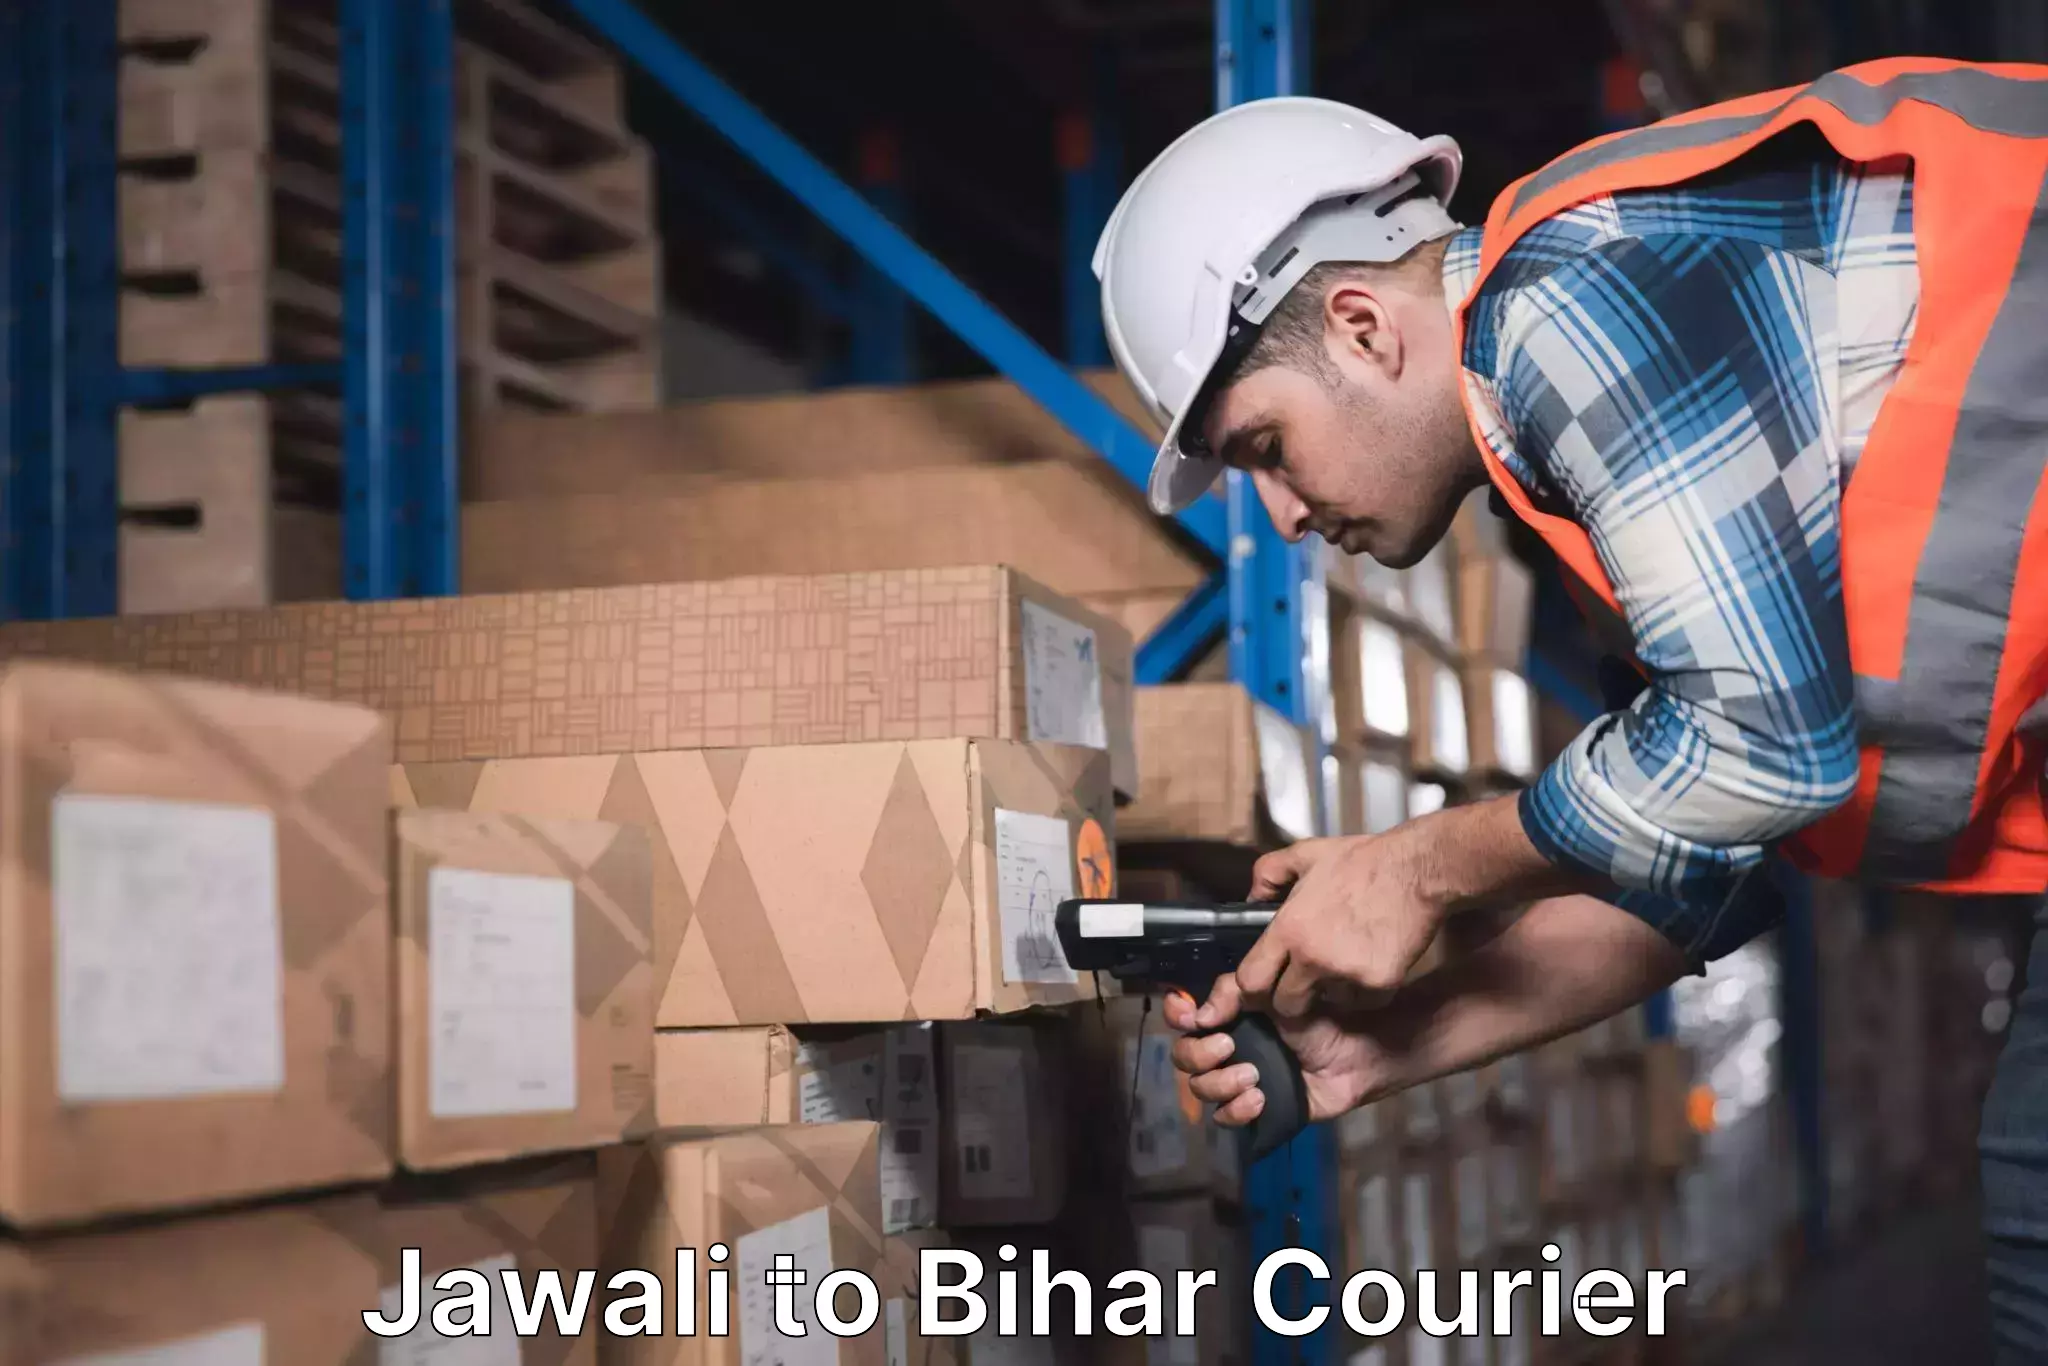 Courier service comparison Jawali to Bettiah